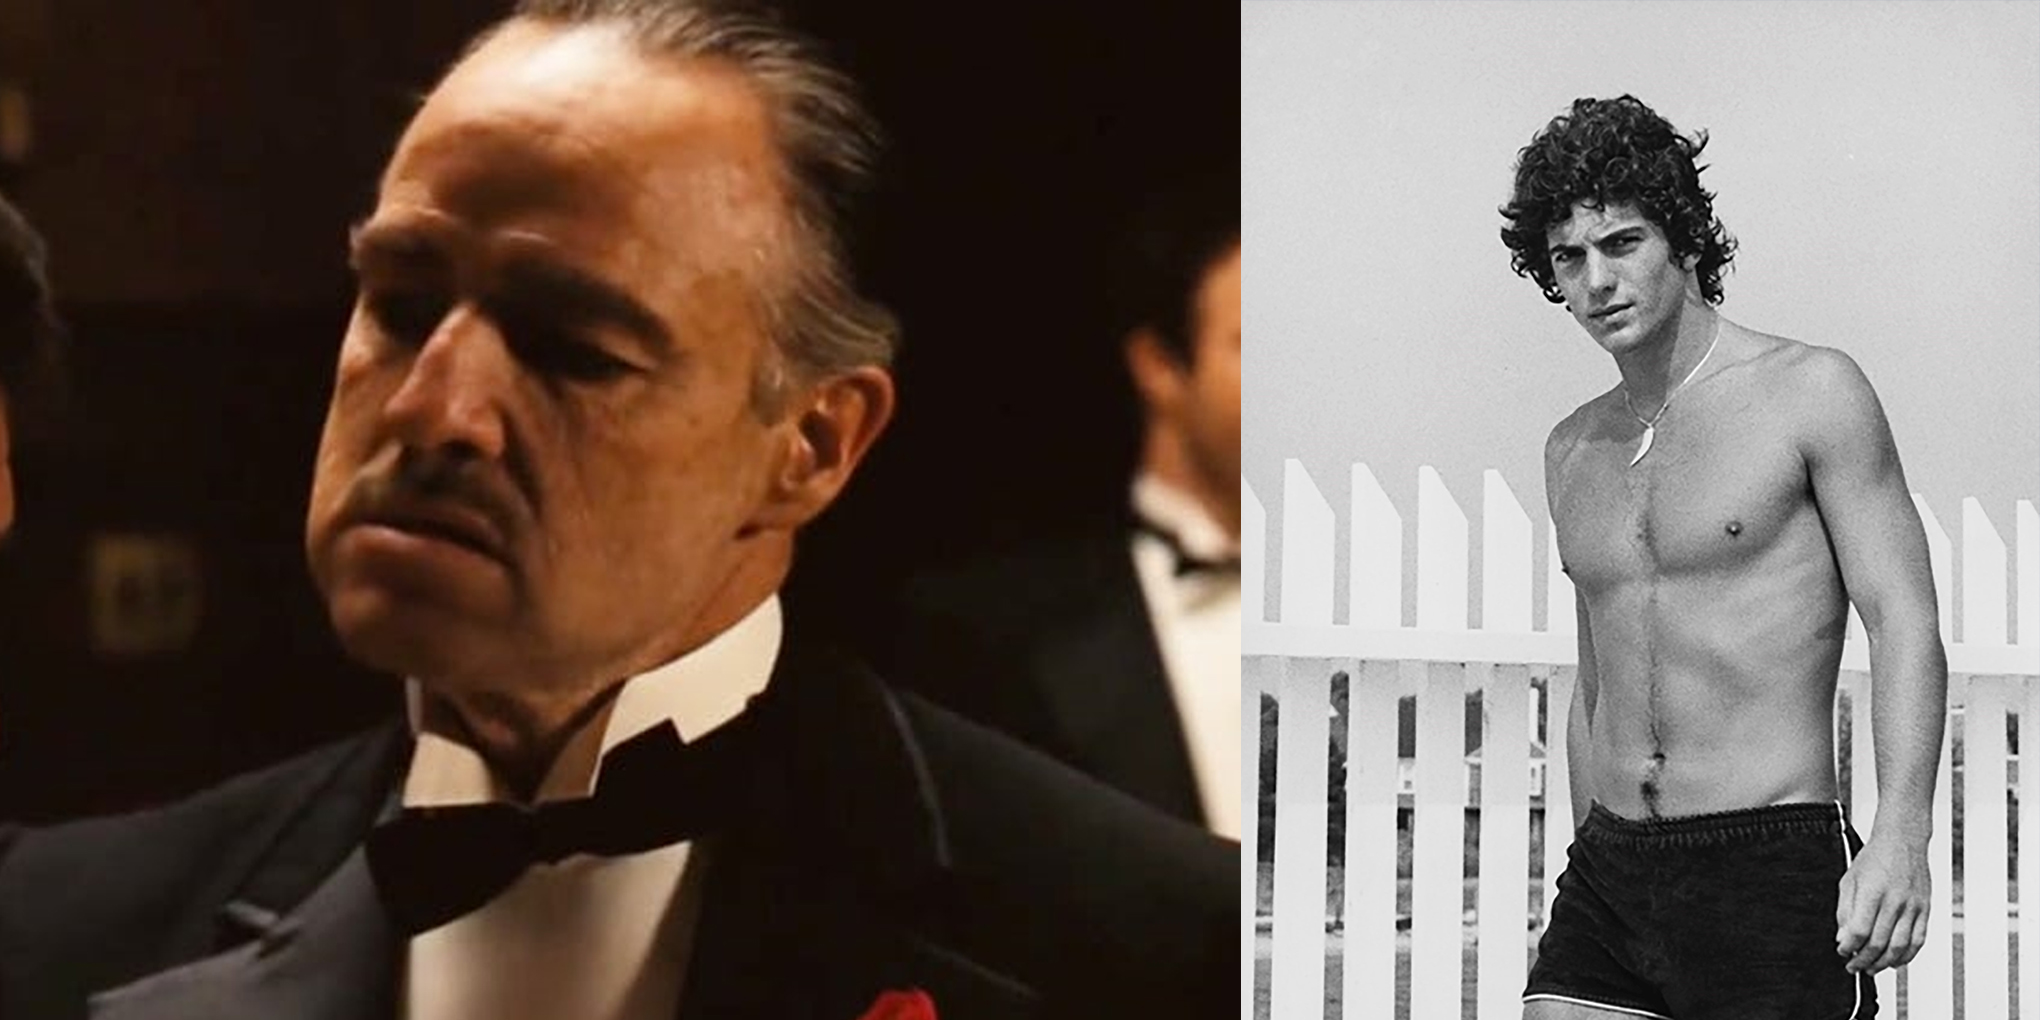 Who is Marlon Brando, The Godfather?